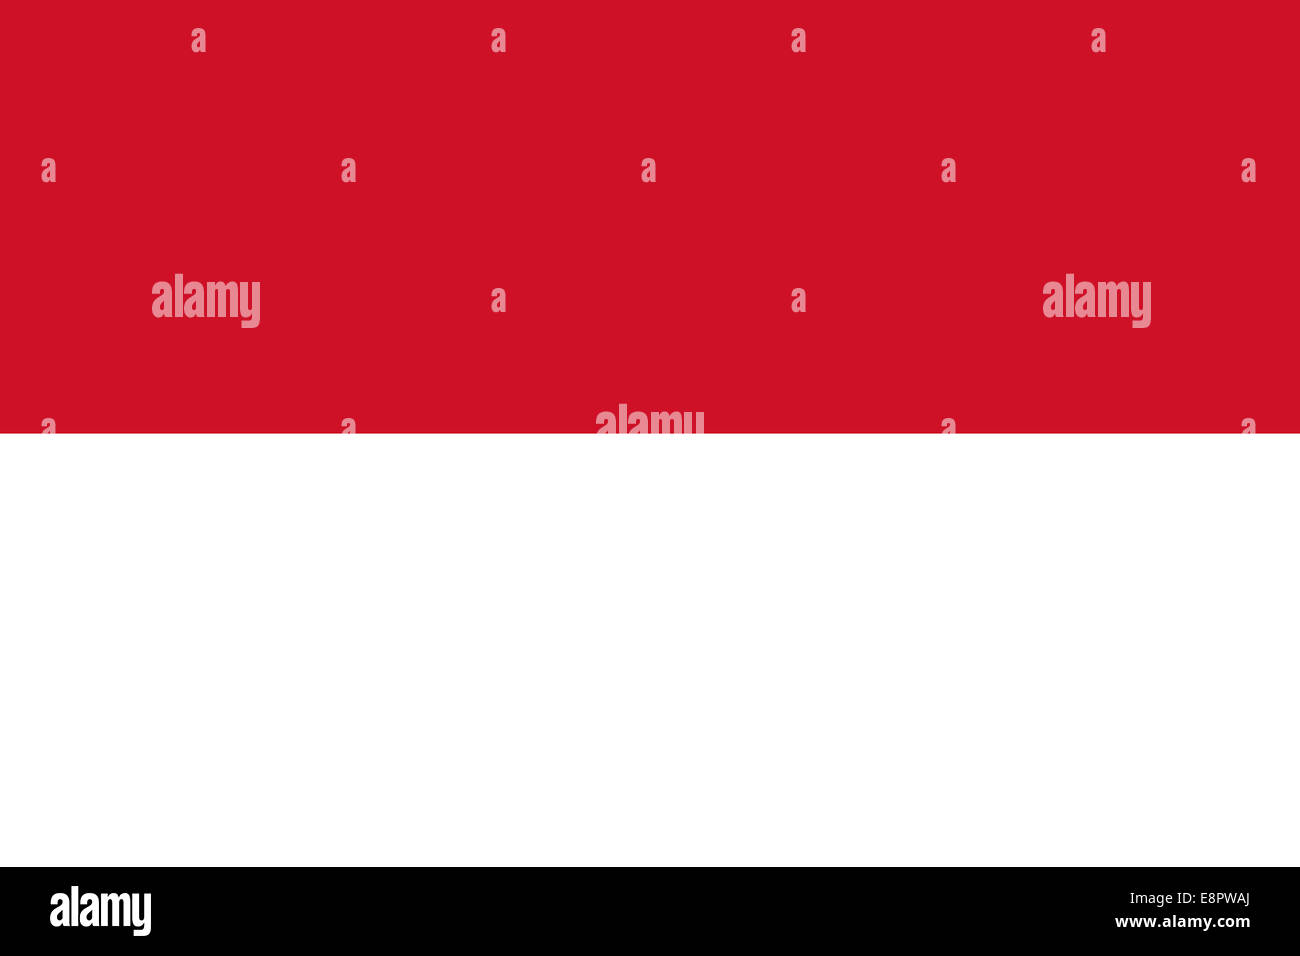 Flagge Indonesiens - Standardverhältnis indonesische Flagge - True RGB-Farbmodus Stockfoto